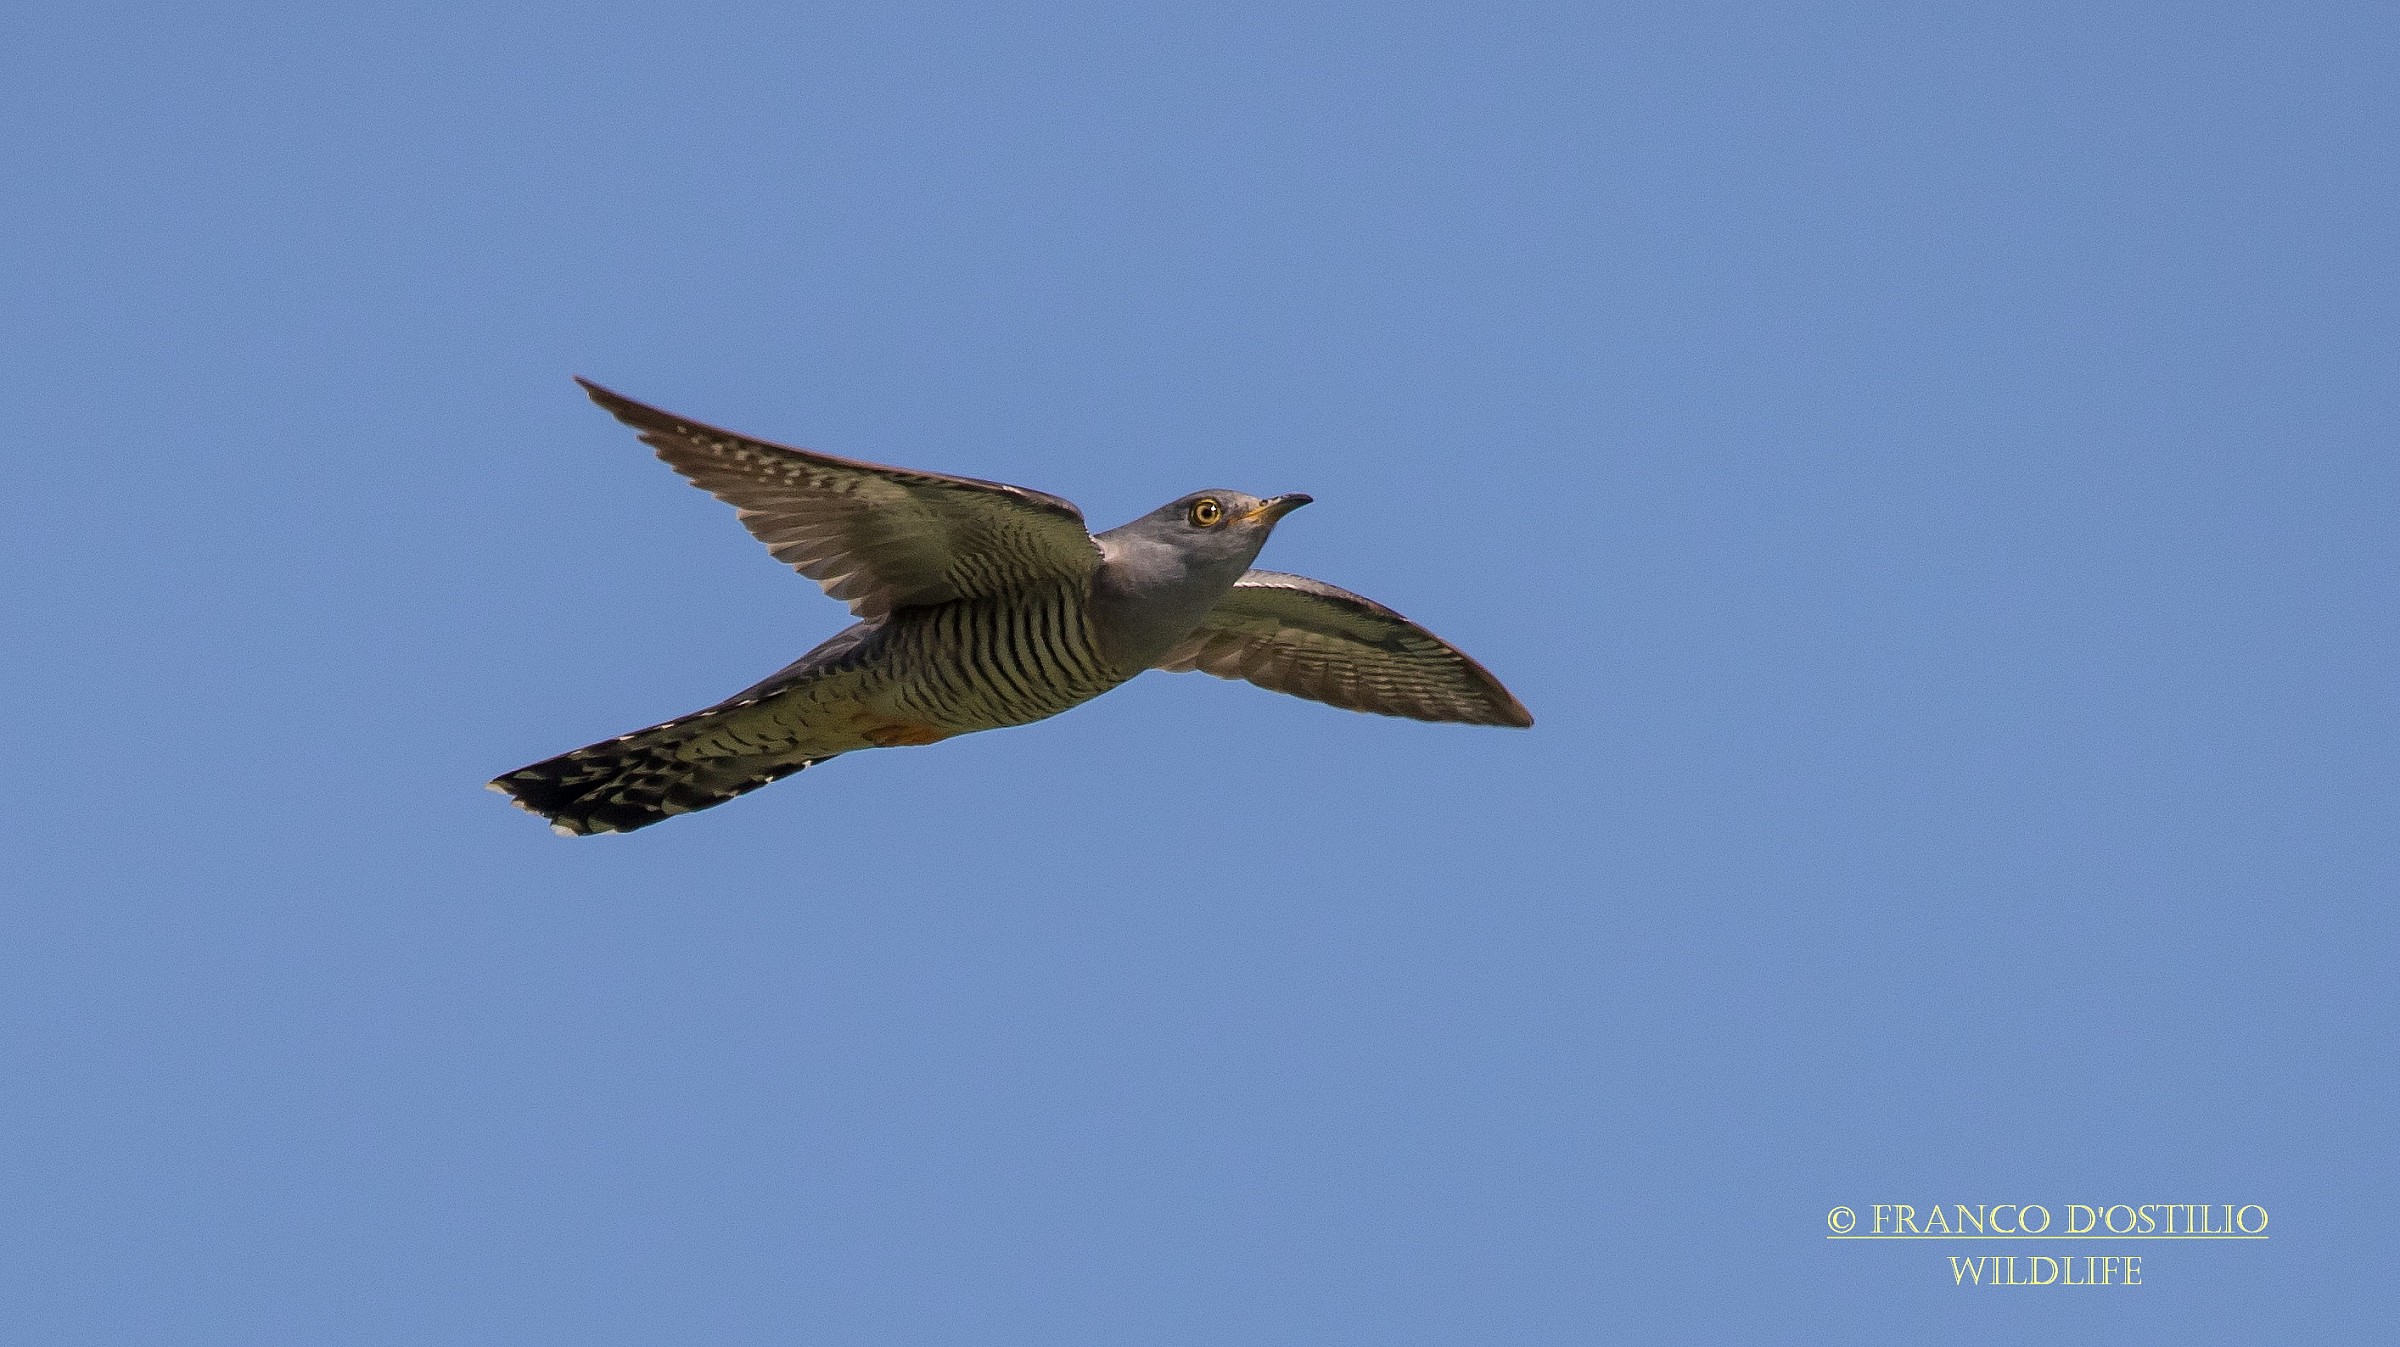 The flight of the cuckoo...